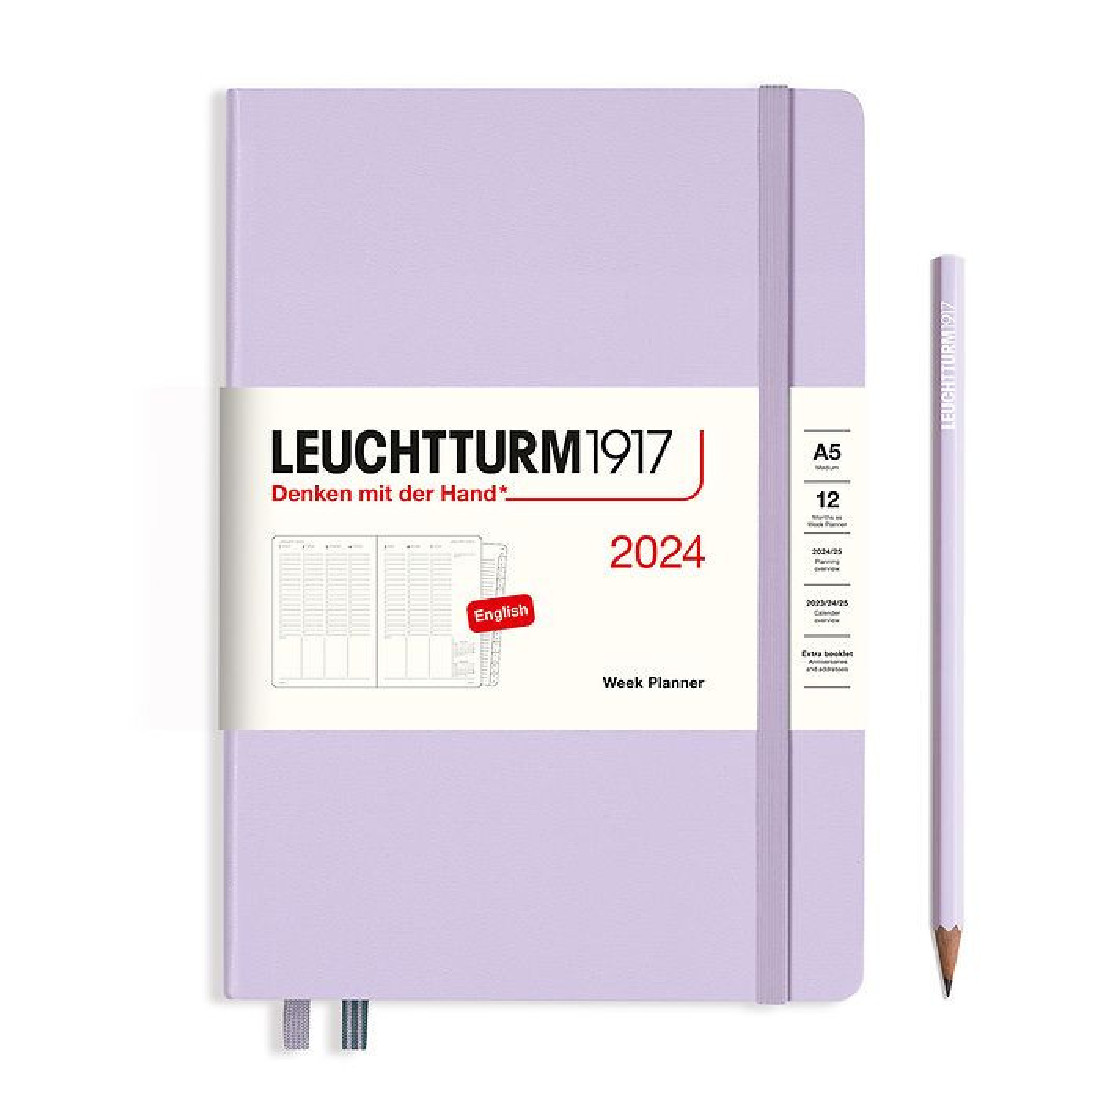 Leuchtturm 1917 Week Planner 2024 Lilac Medium A5 Hard Cover